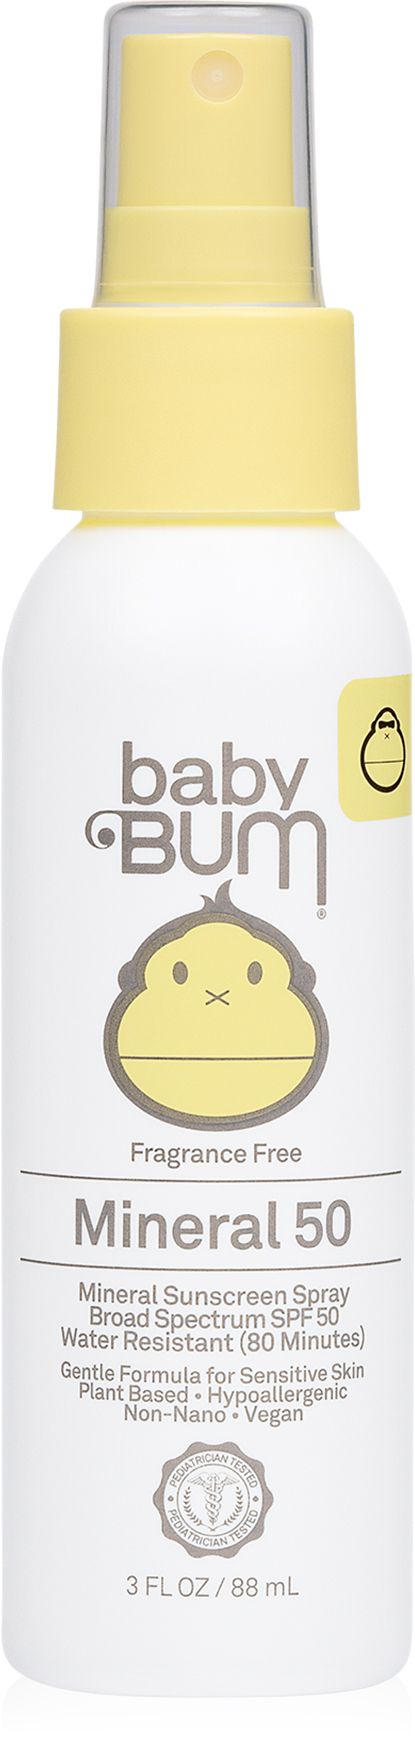 Sun Bum SPF 50 Baby Spray